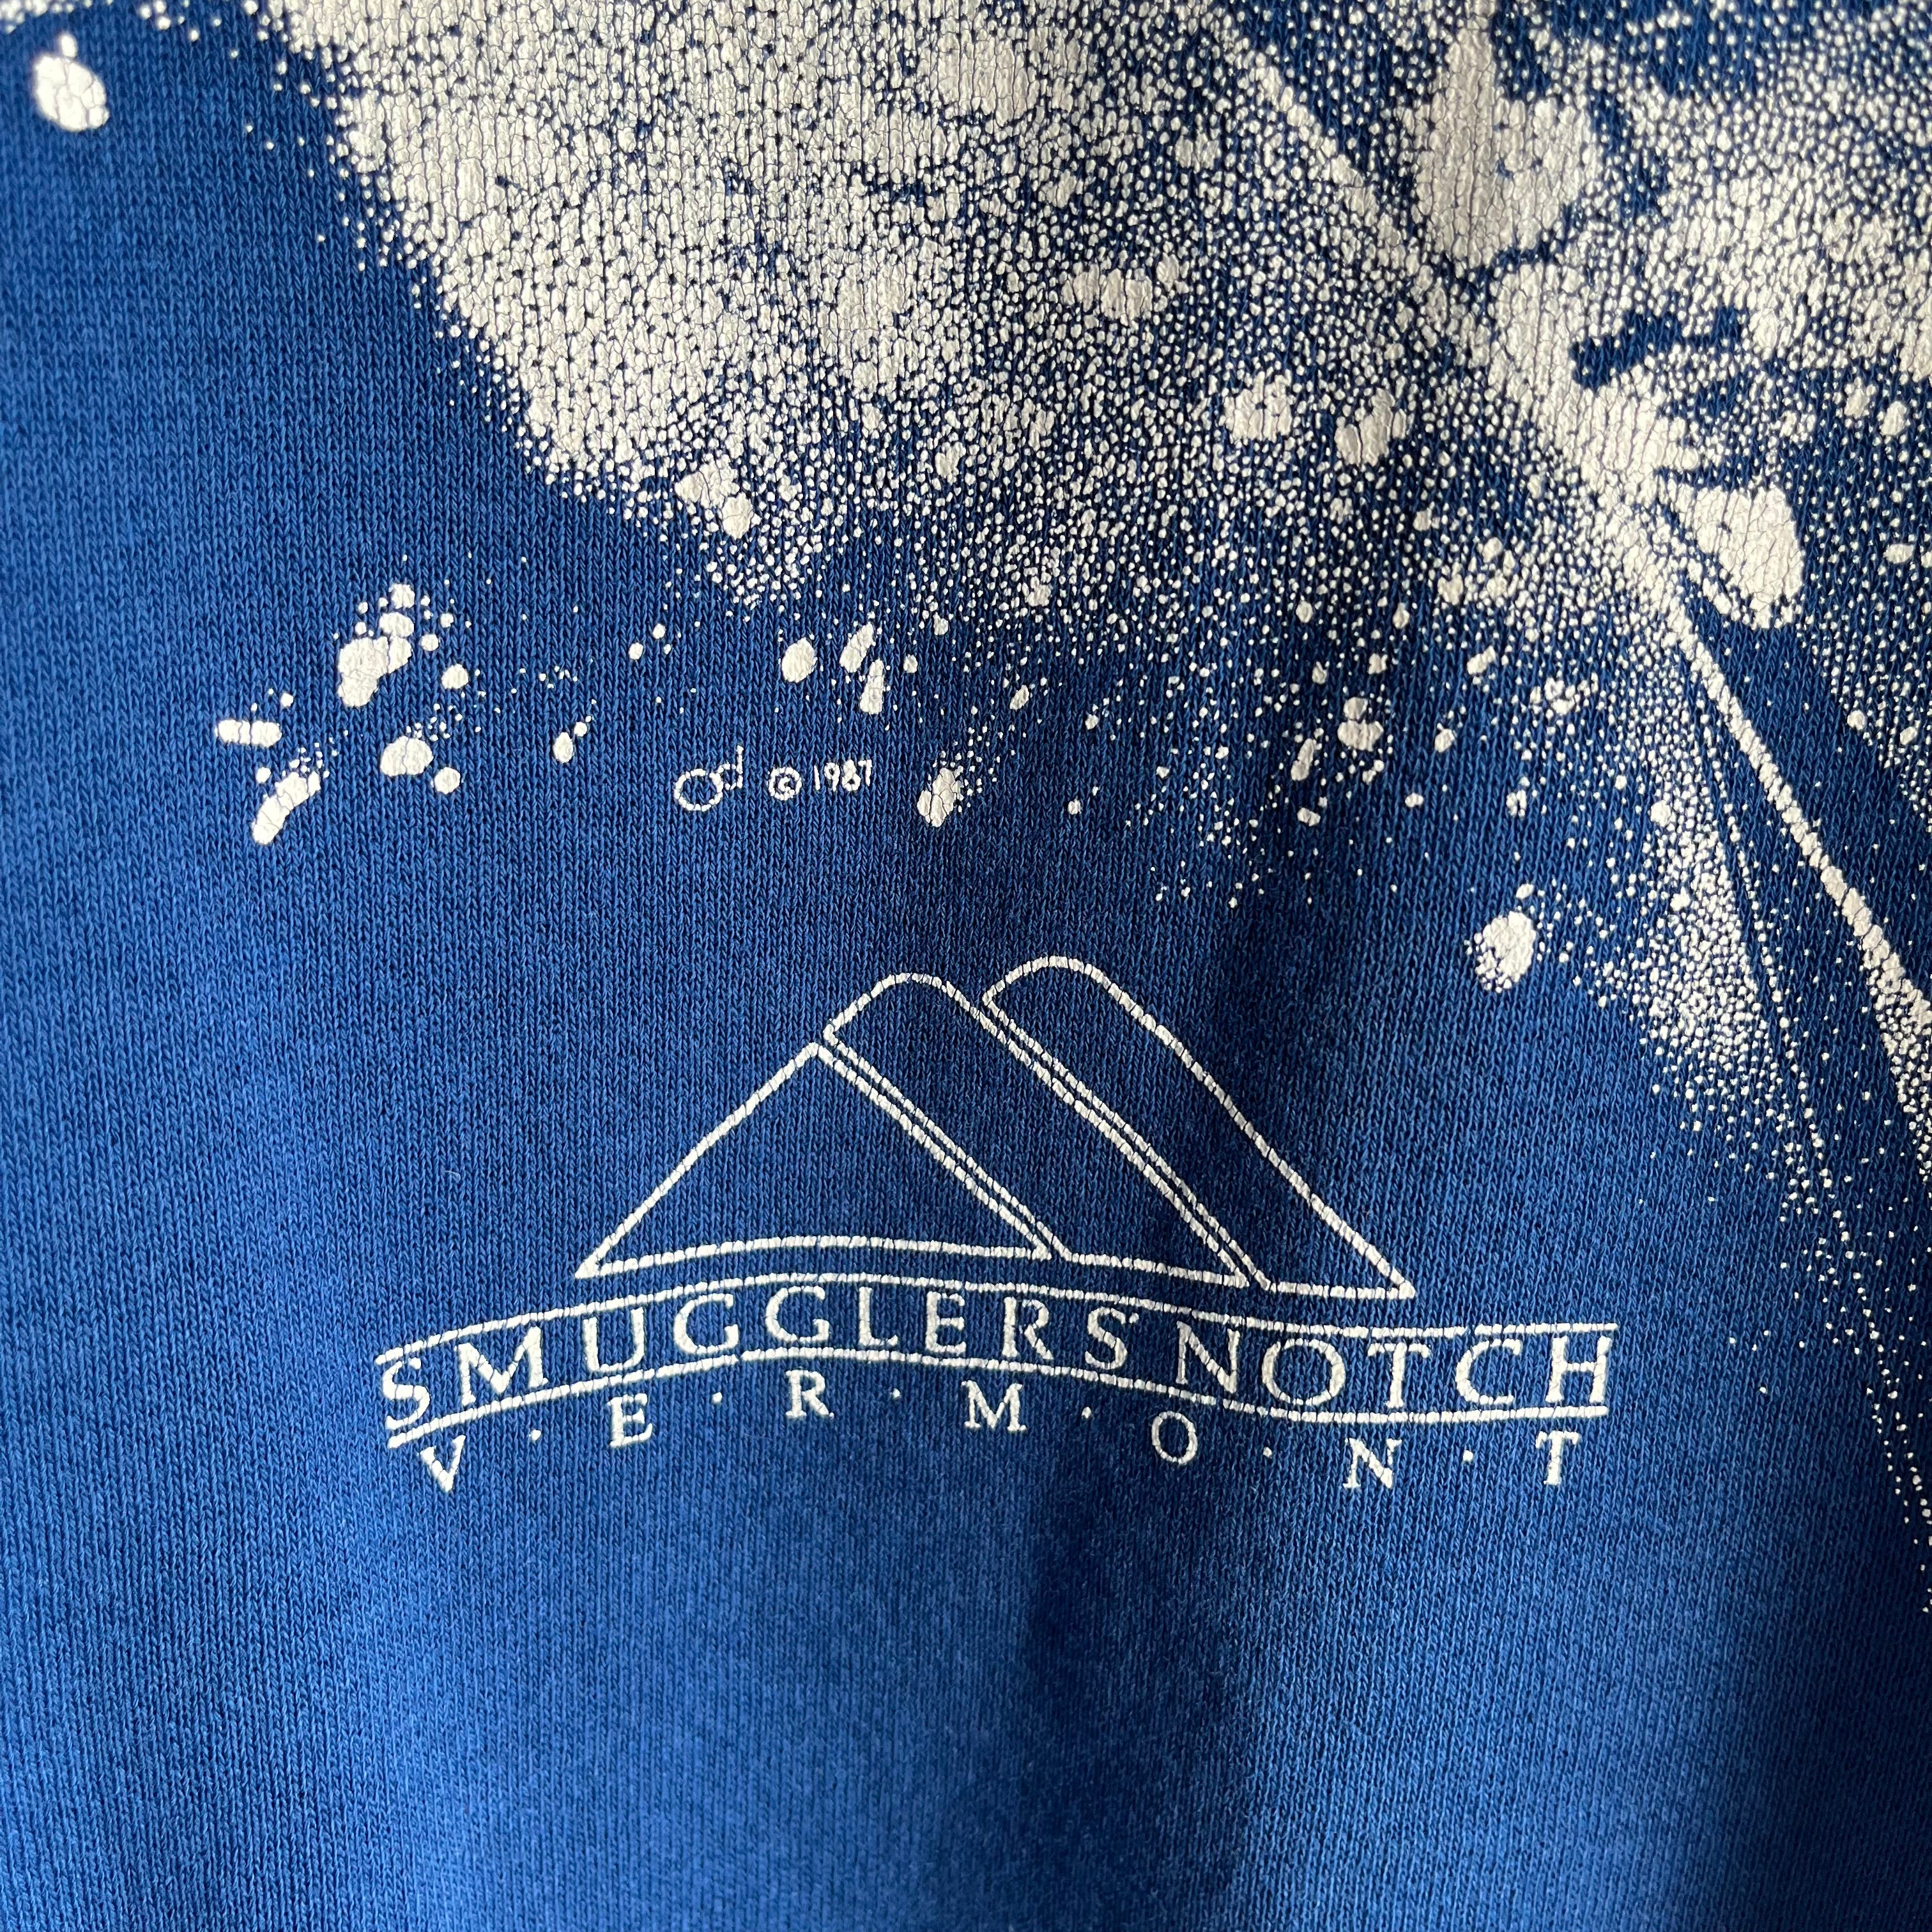 1987 Smugglers' Notch Vermont Steeps and Deeps Ski Sweatshirt